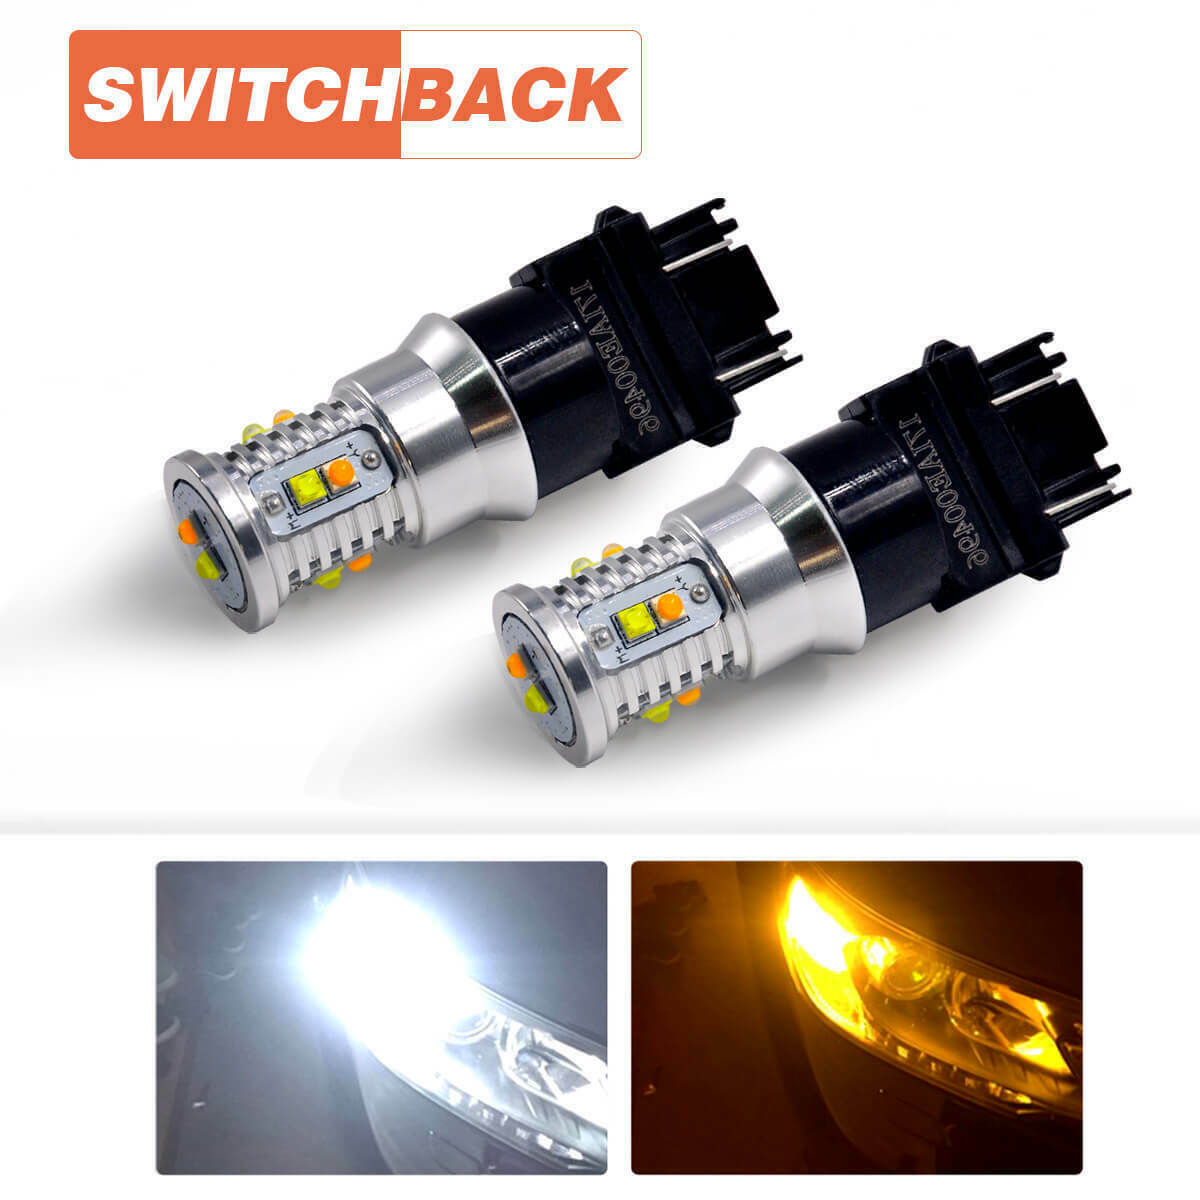 2x 3157 Switchback LED Front Turn Signal Light Bulb for Dodge Ram 1500 2500 3500